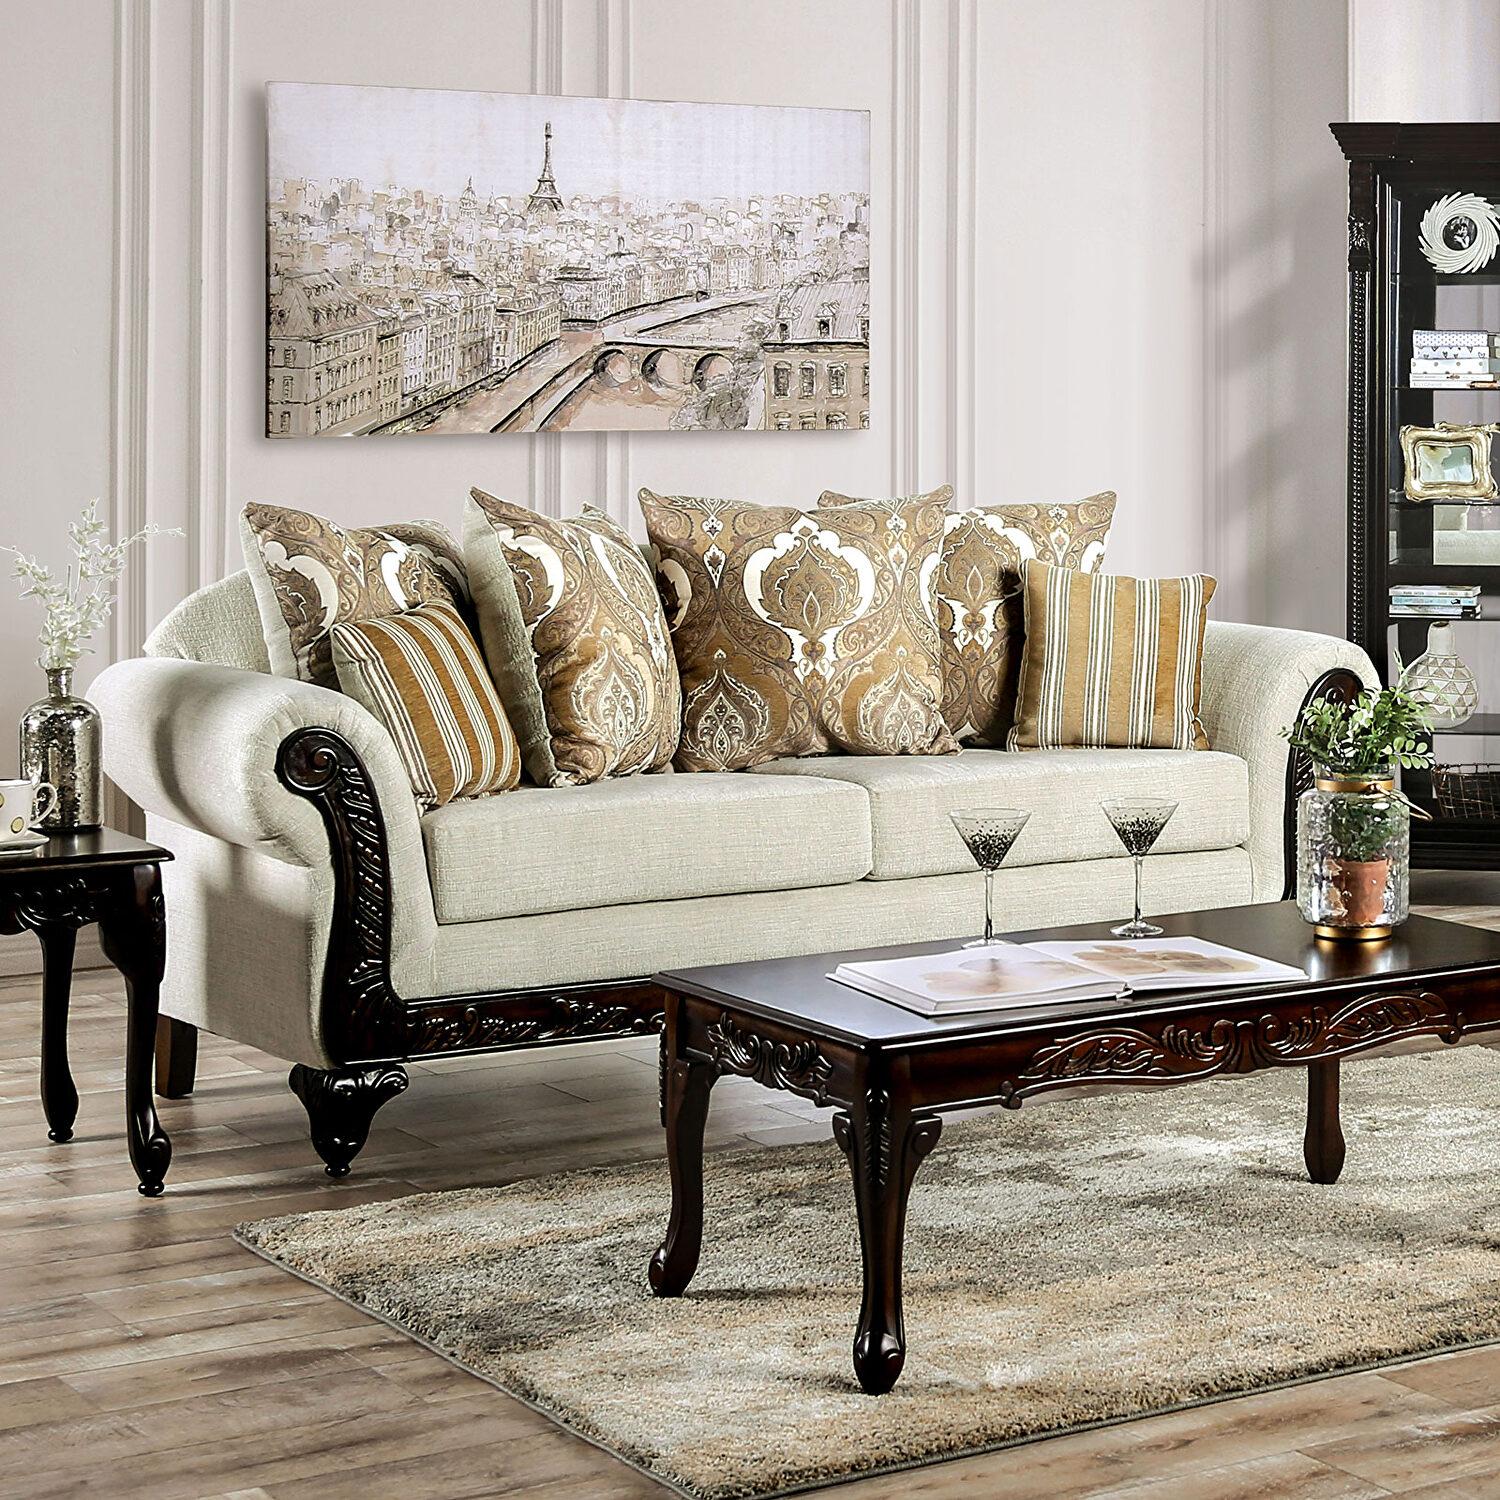 

    
Traditional Cream & Black Living Room Set 5pcs Furniture of America Delizia & Cheshire
